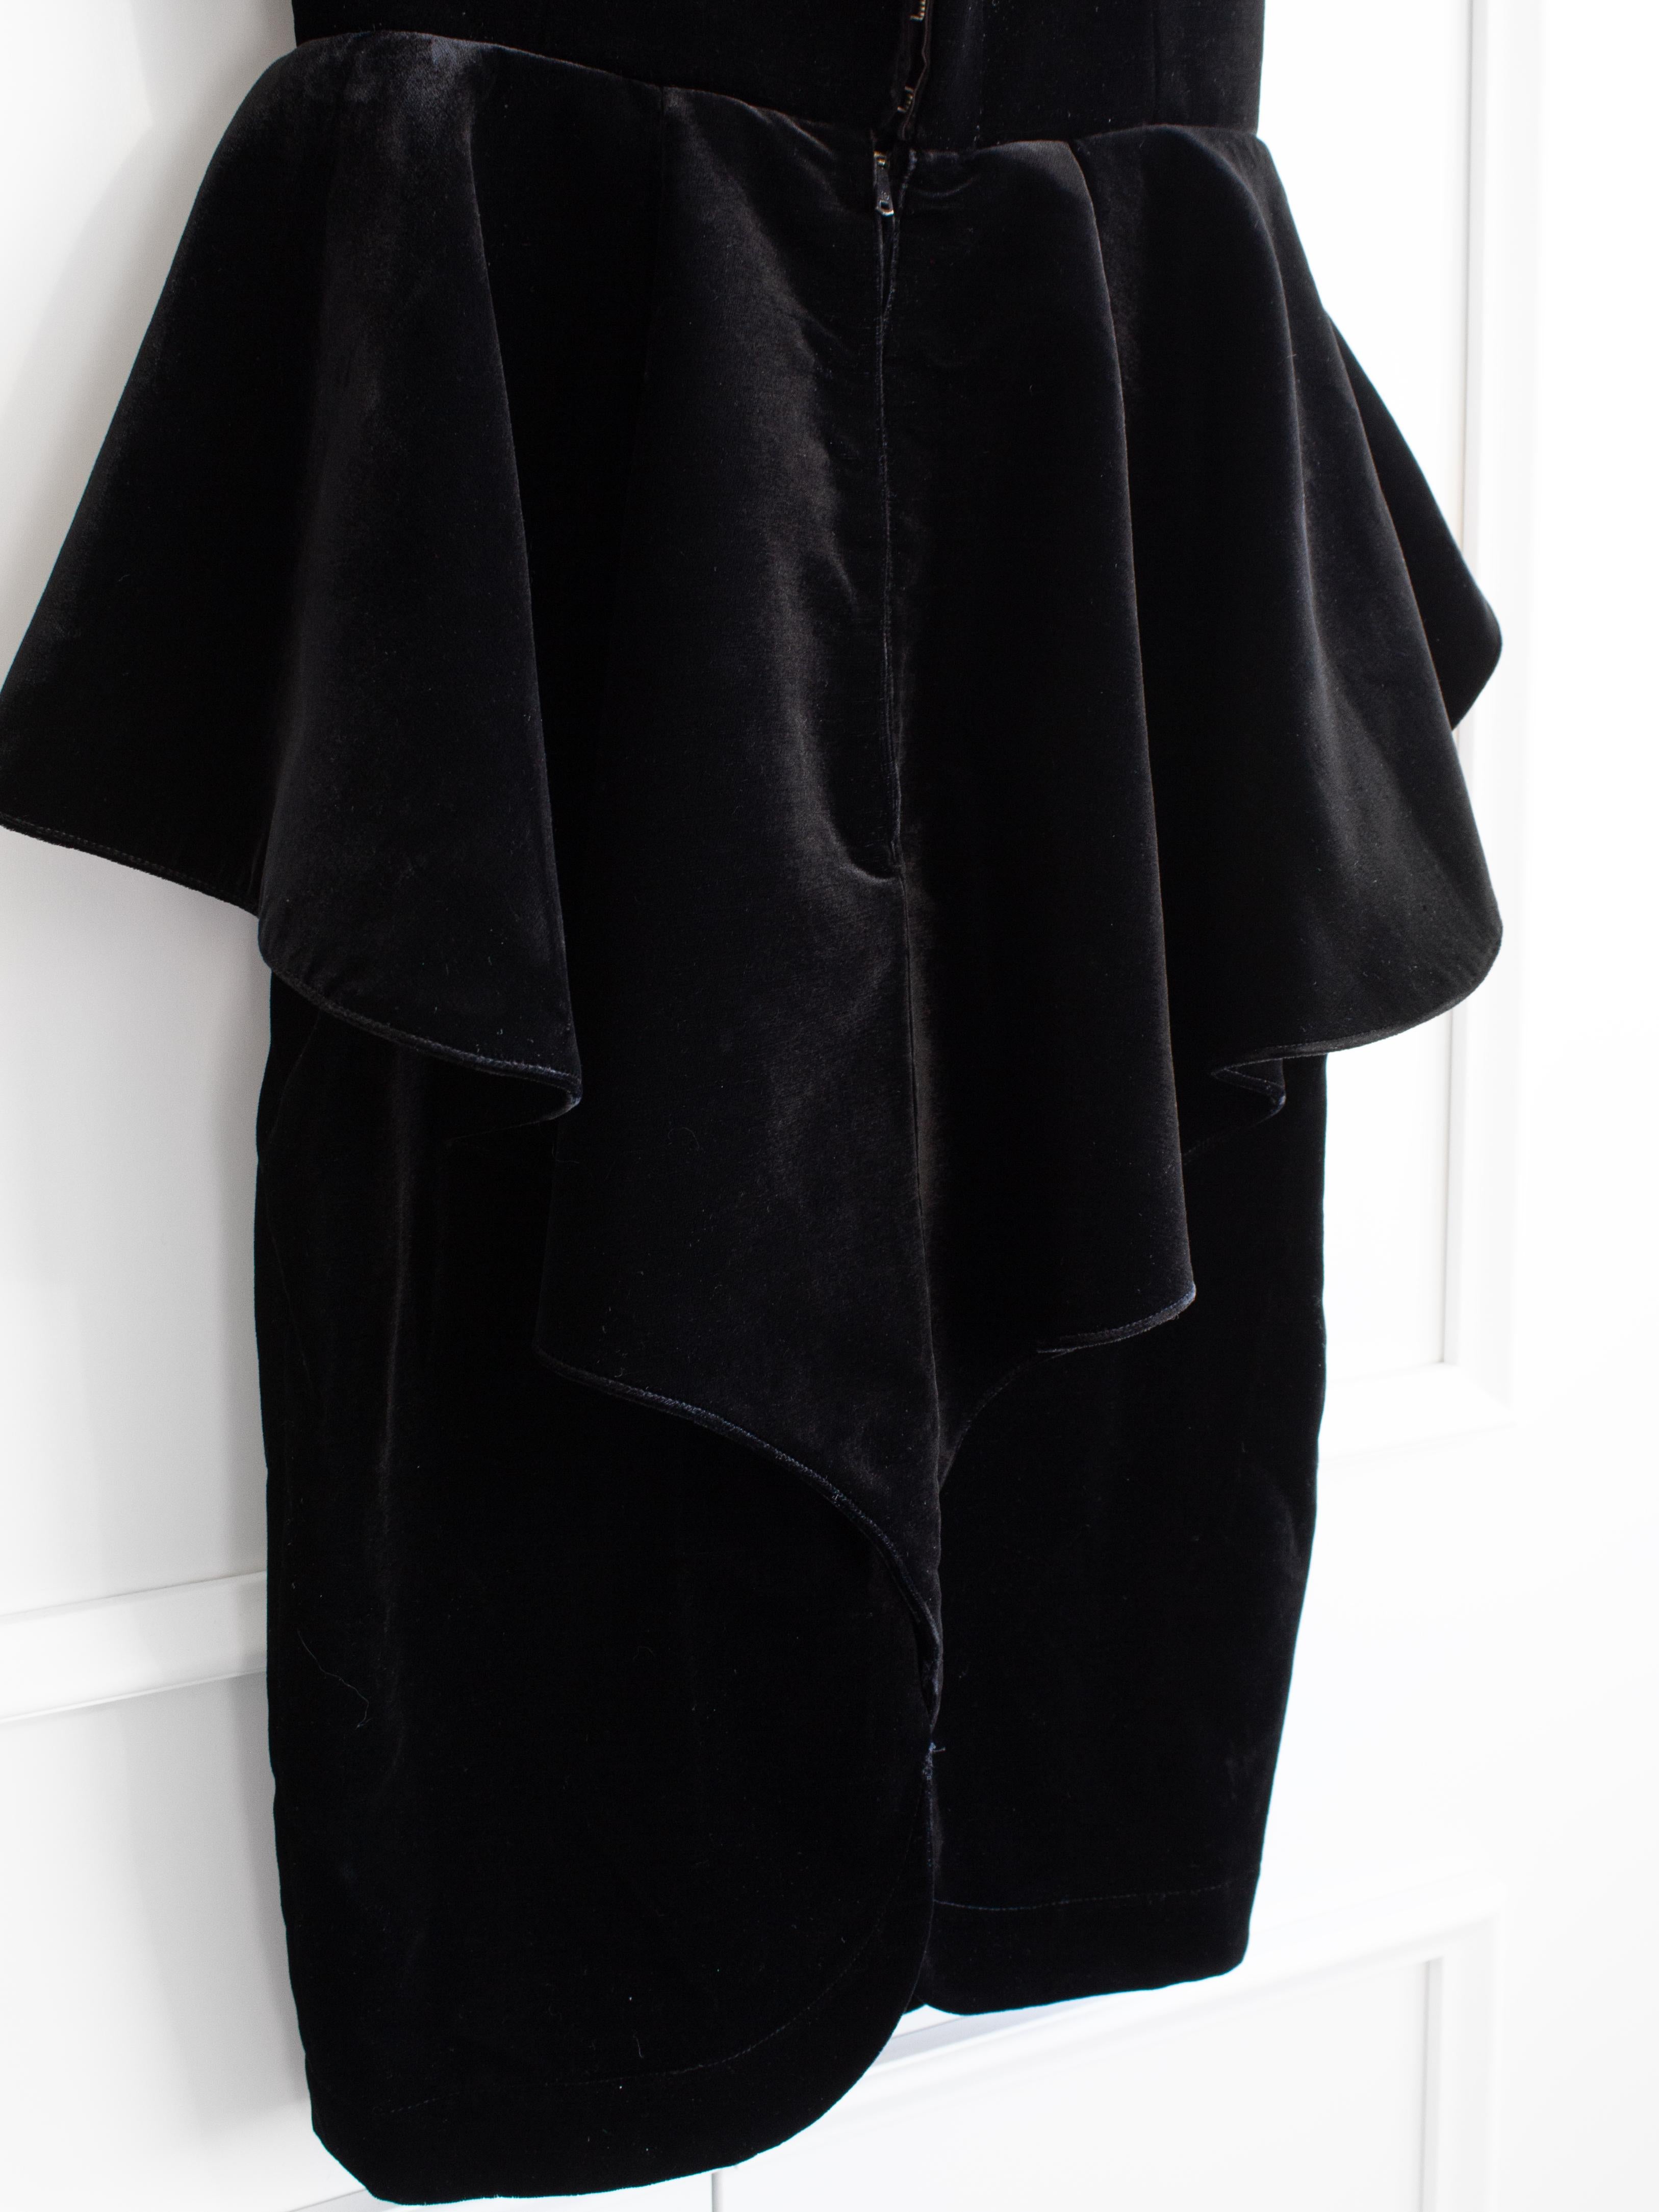 Iconic Thierry Mugler Vintage 1981 Black Velvet Peplum Vampire Dress 8